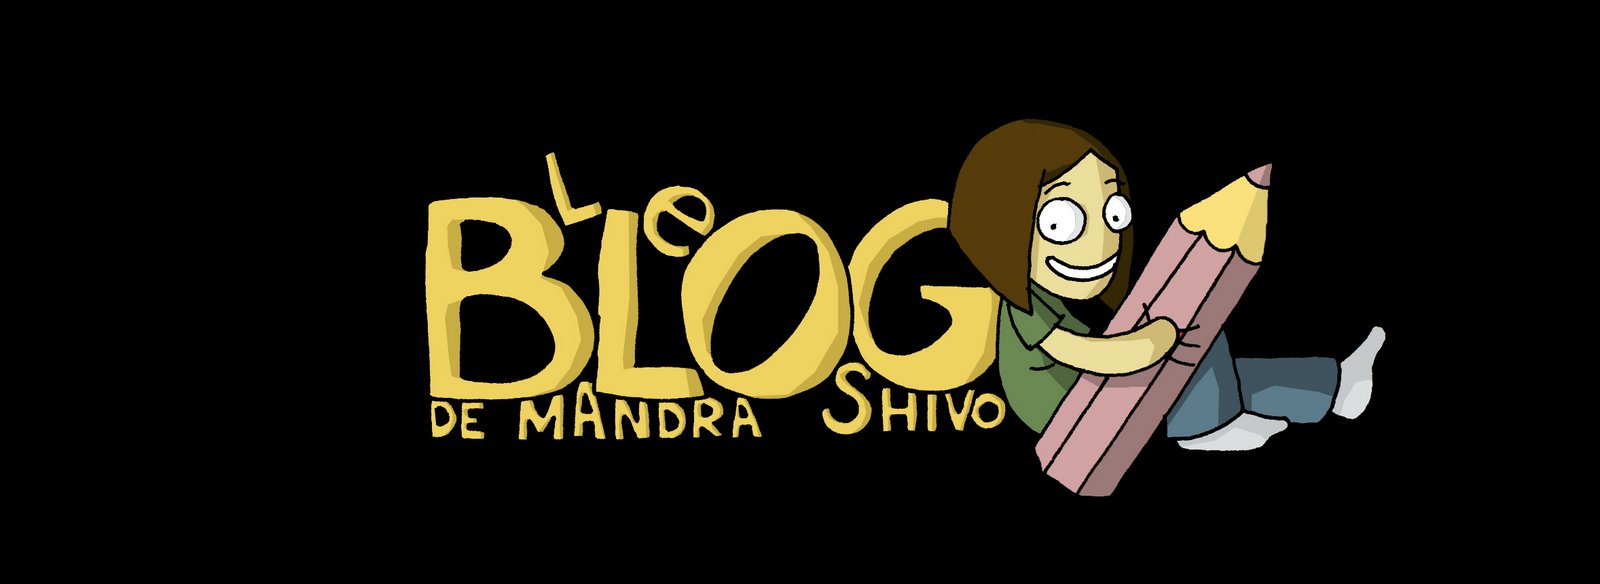 Le Blog de Mandra Shivo